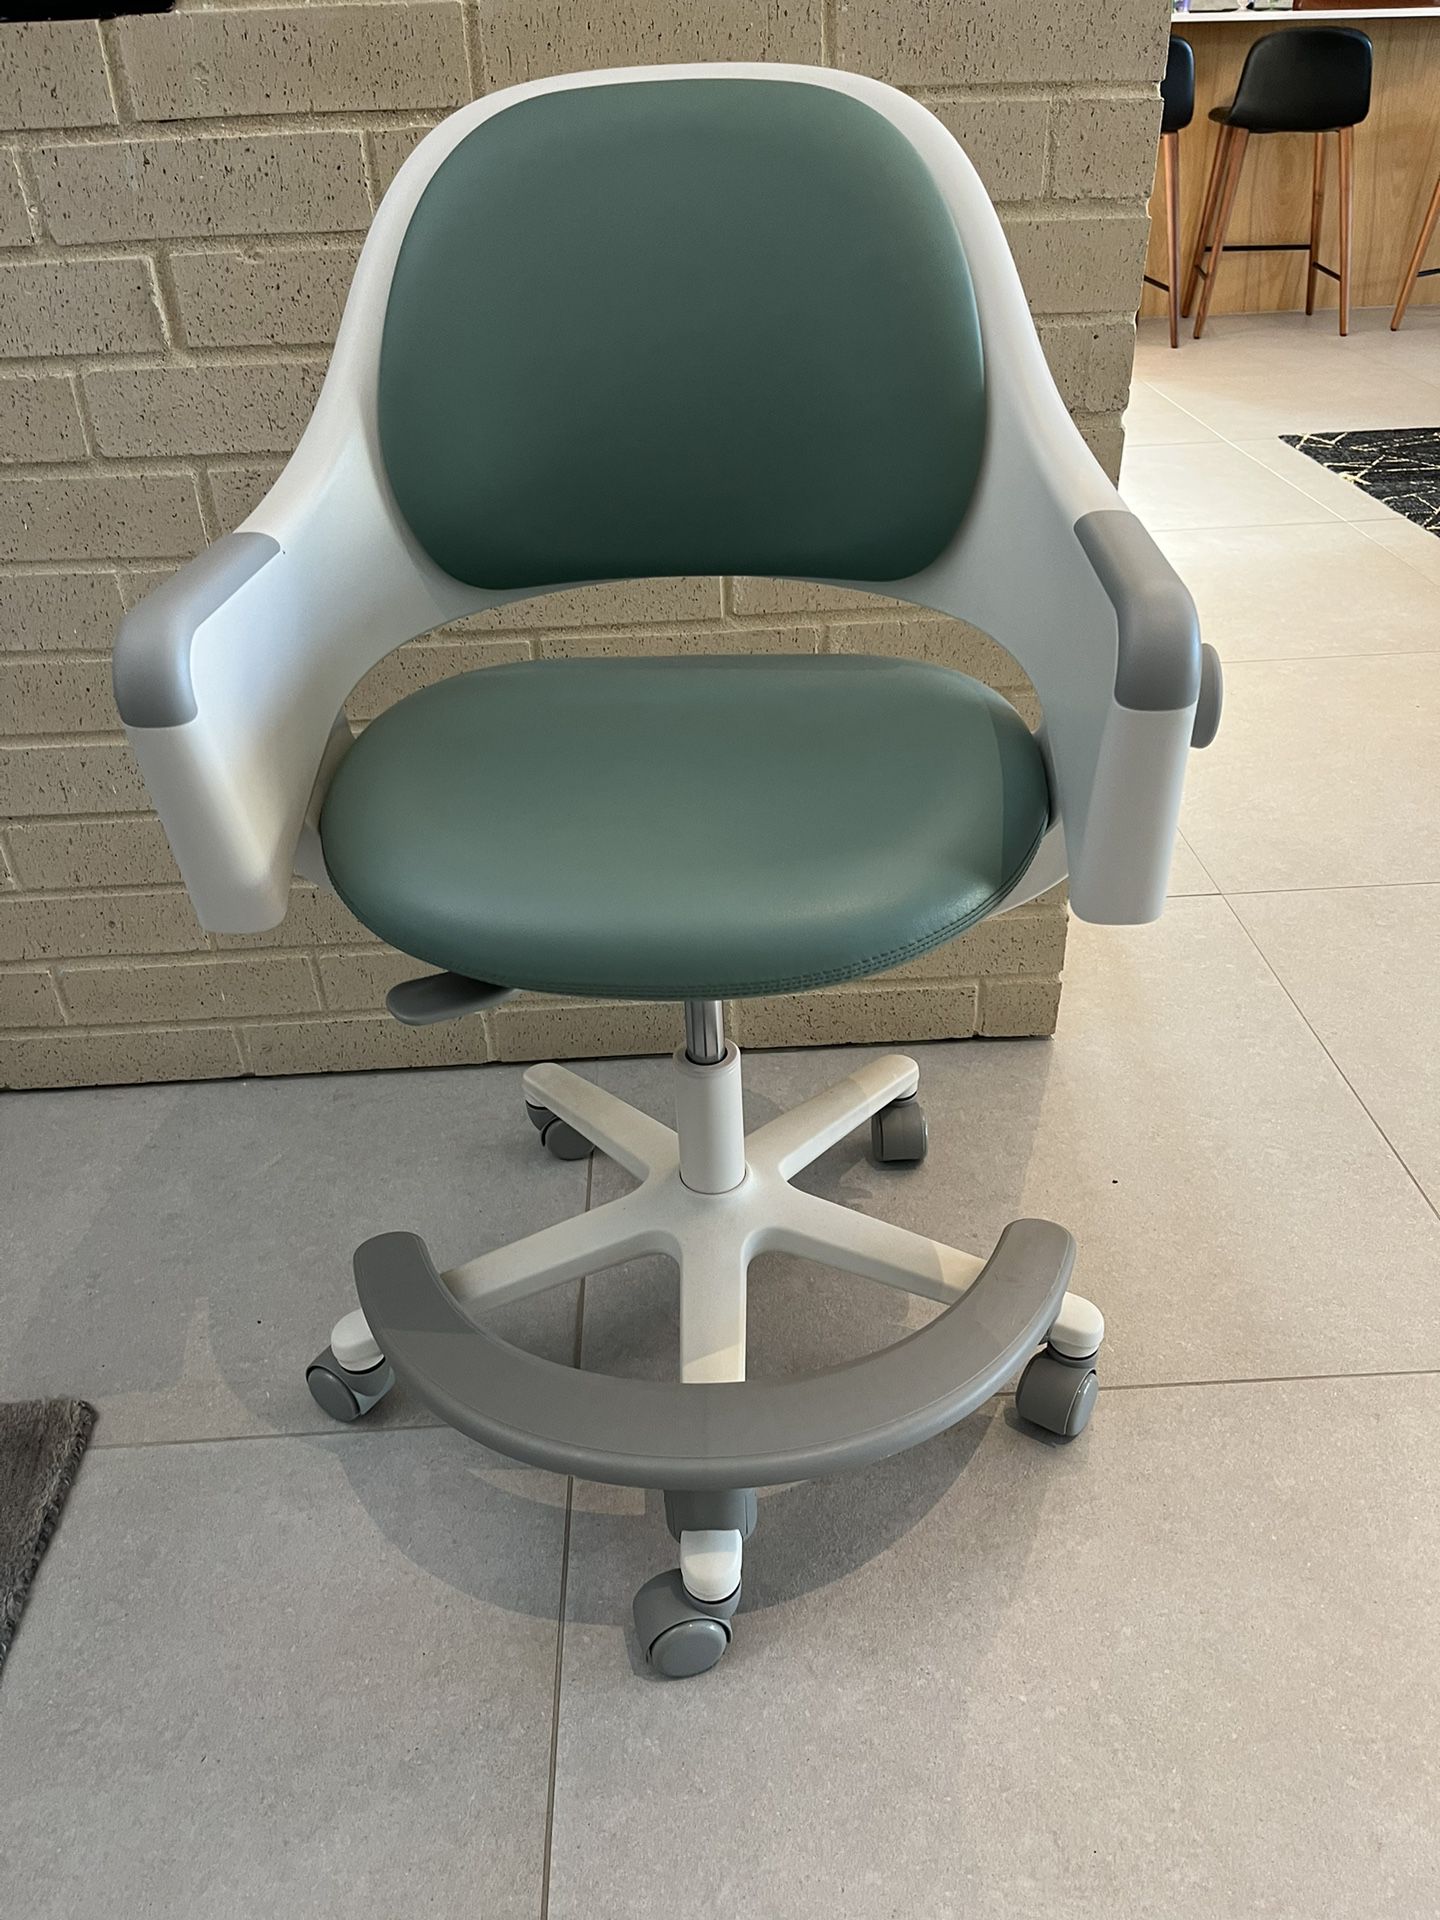 Kid’s Desk Chair - Like New 